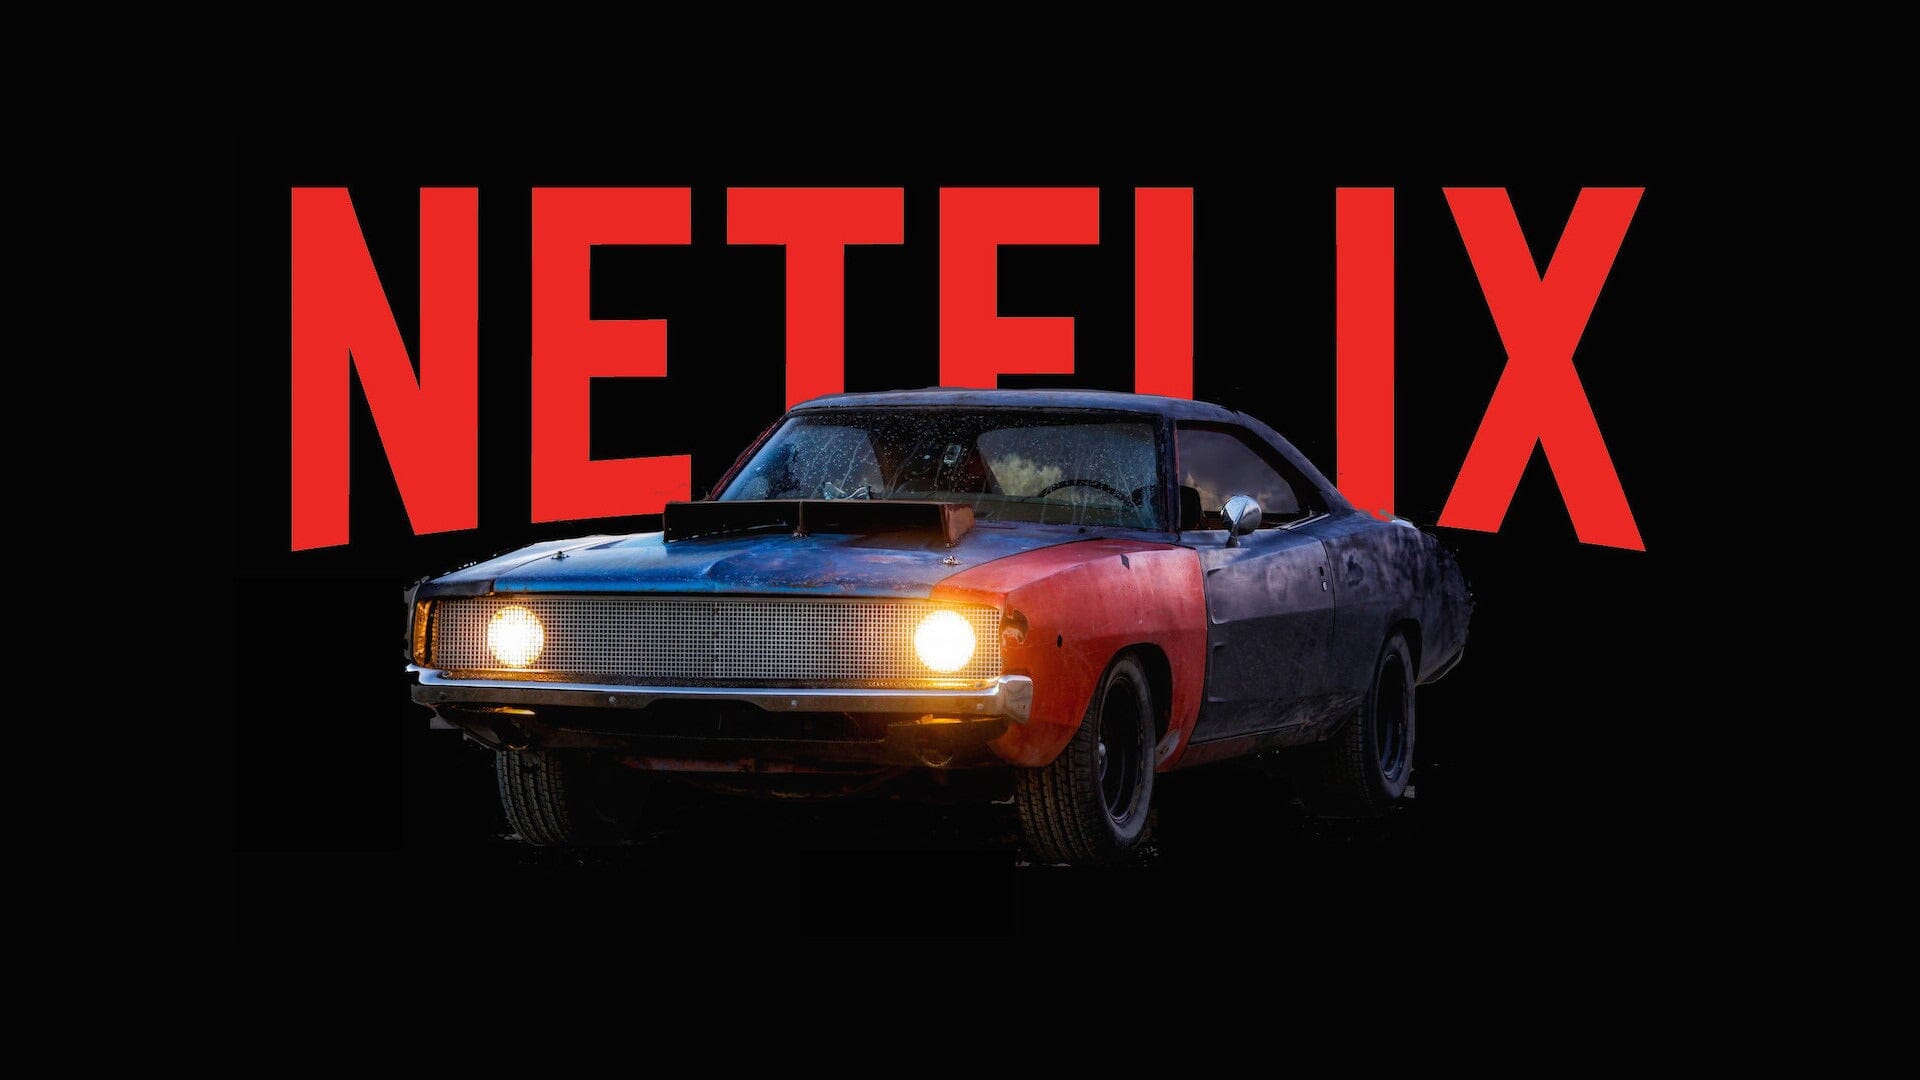 We round up the best automotive shows on Netflix